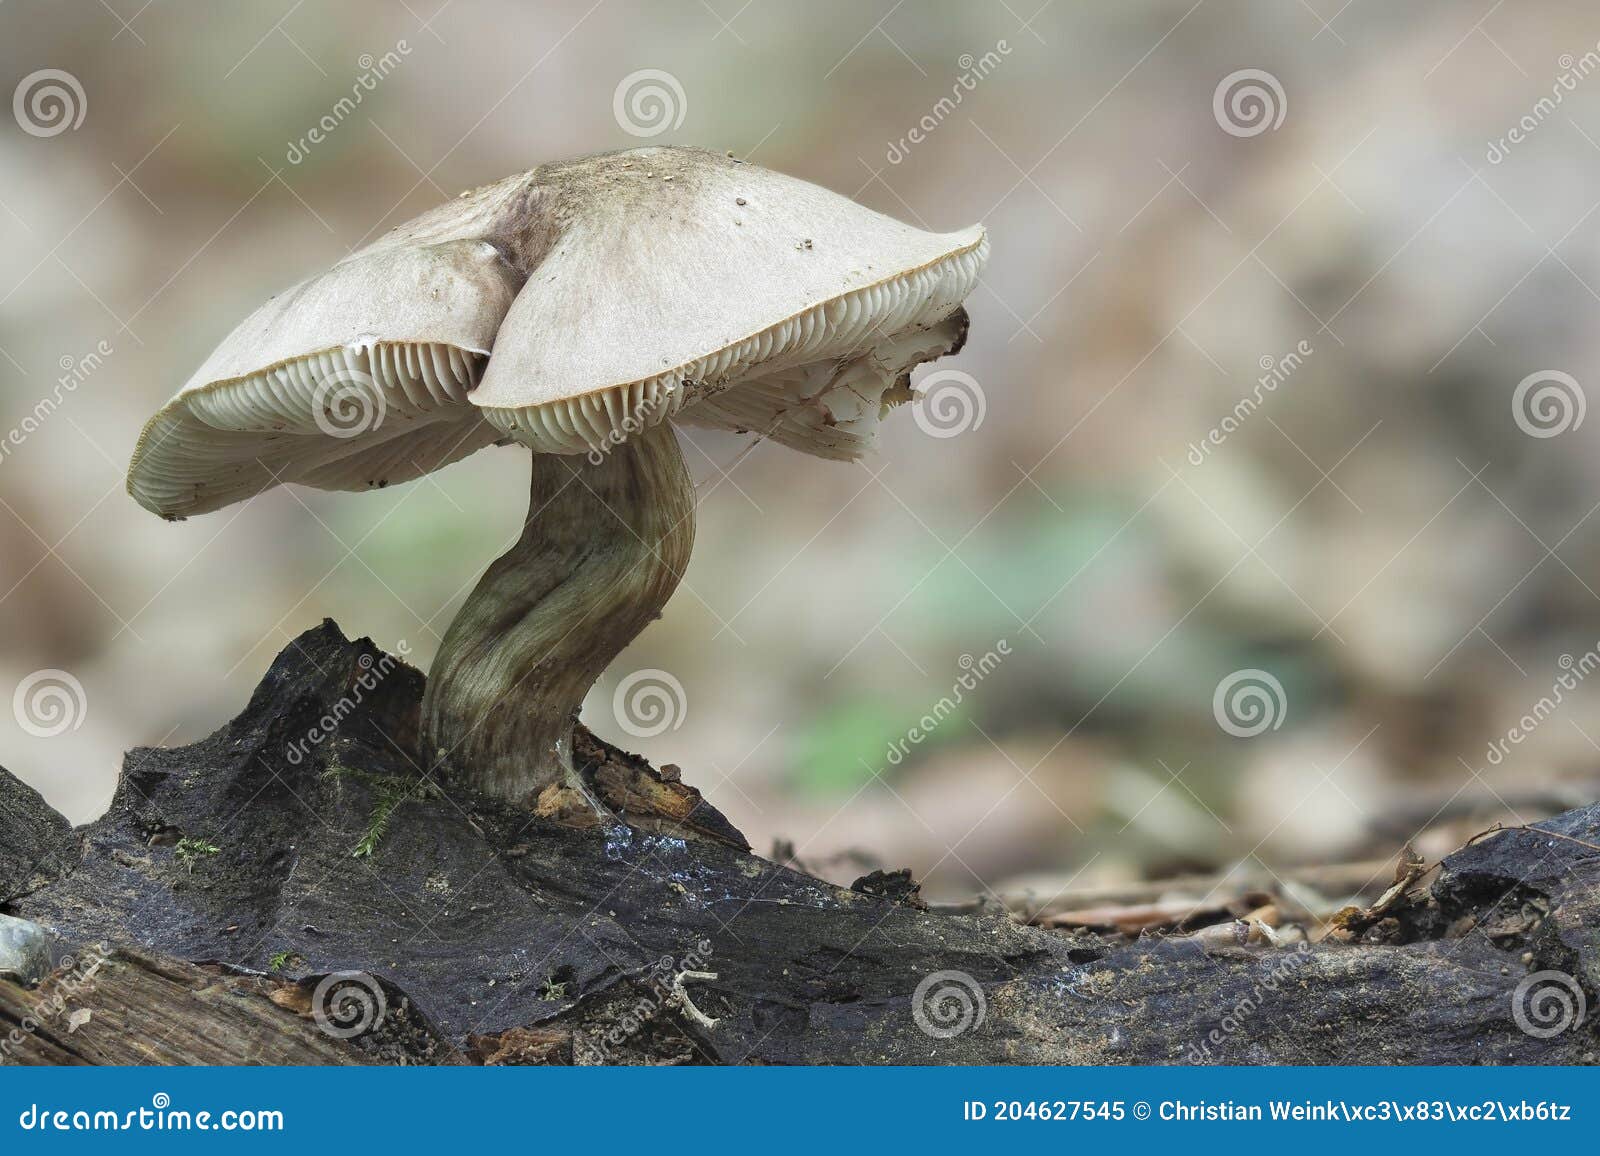 the deer shield (pluteus cervinus) is an edible mushroom